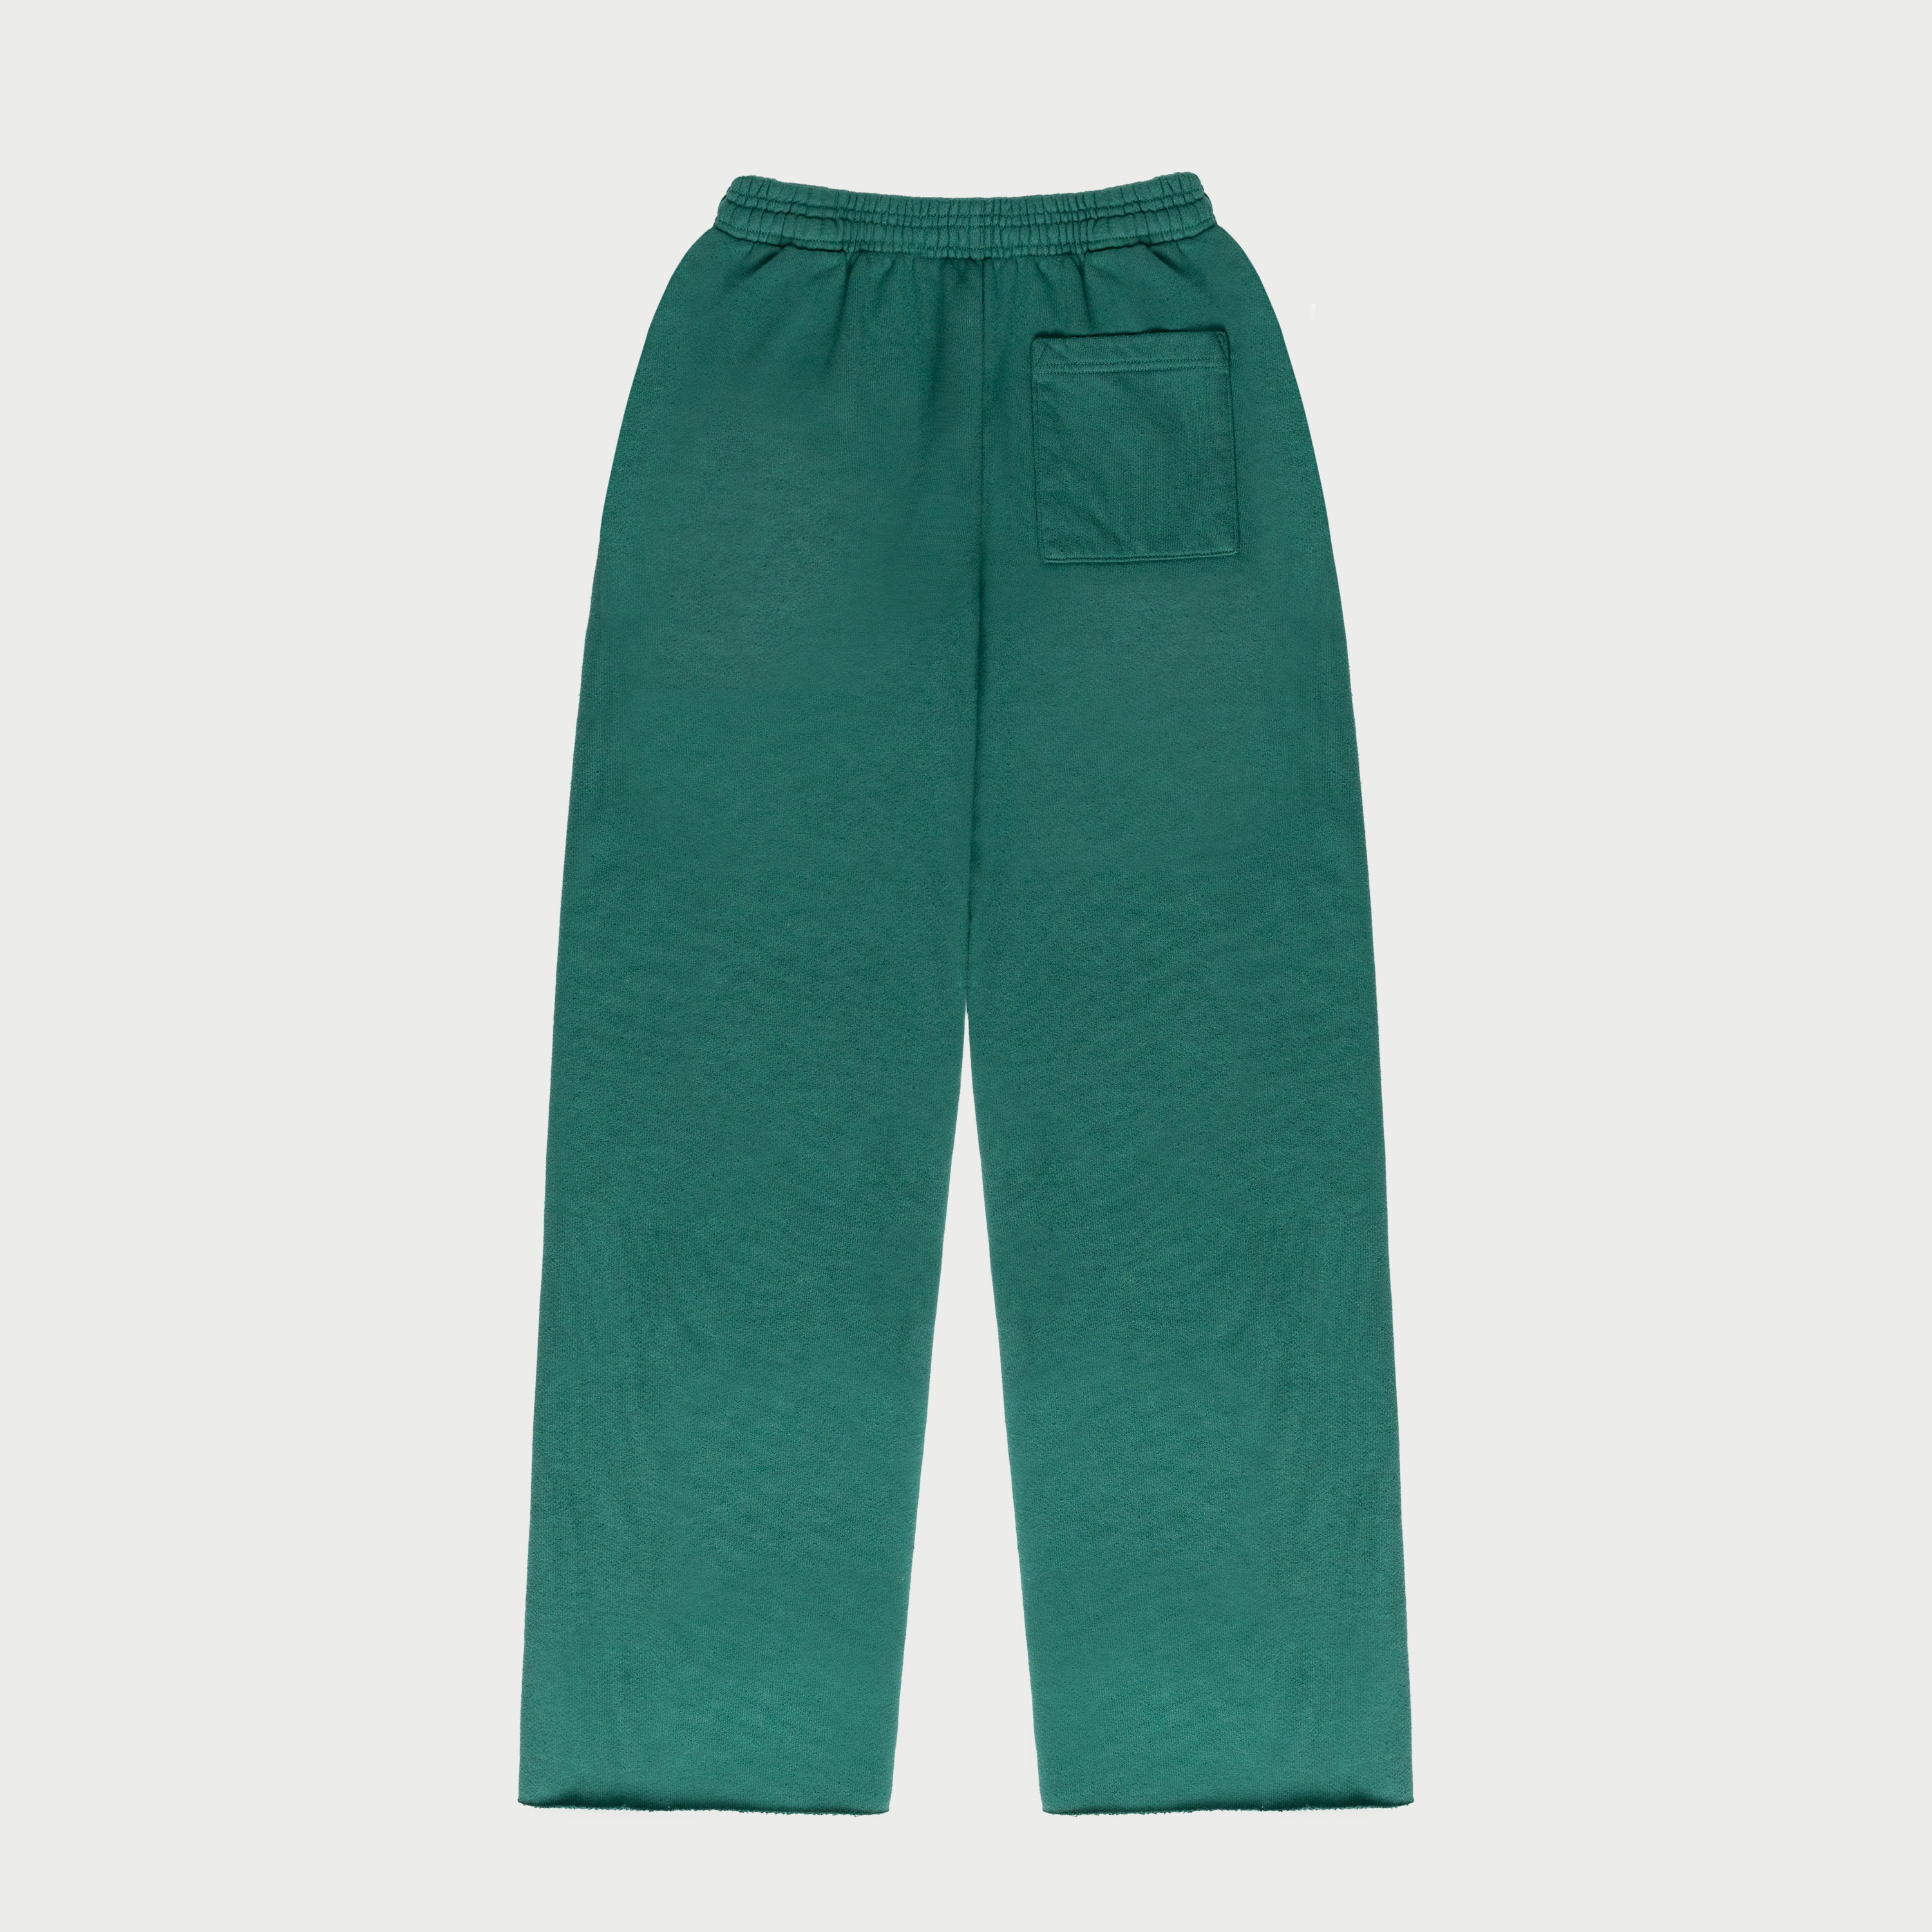 Western Athletic Sweatpants (Emerald)